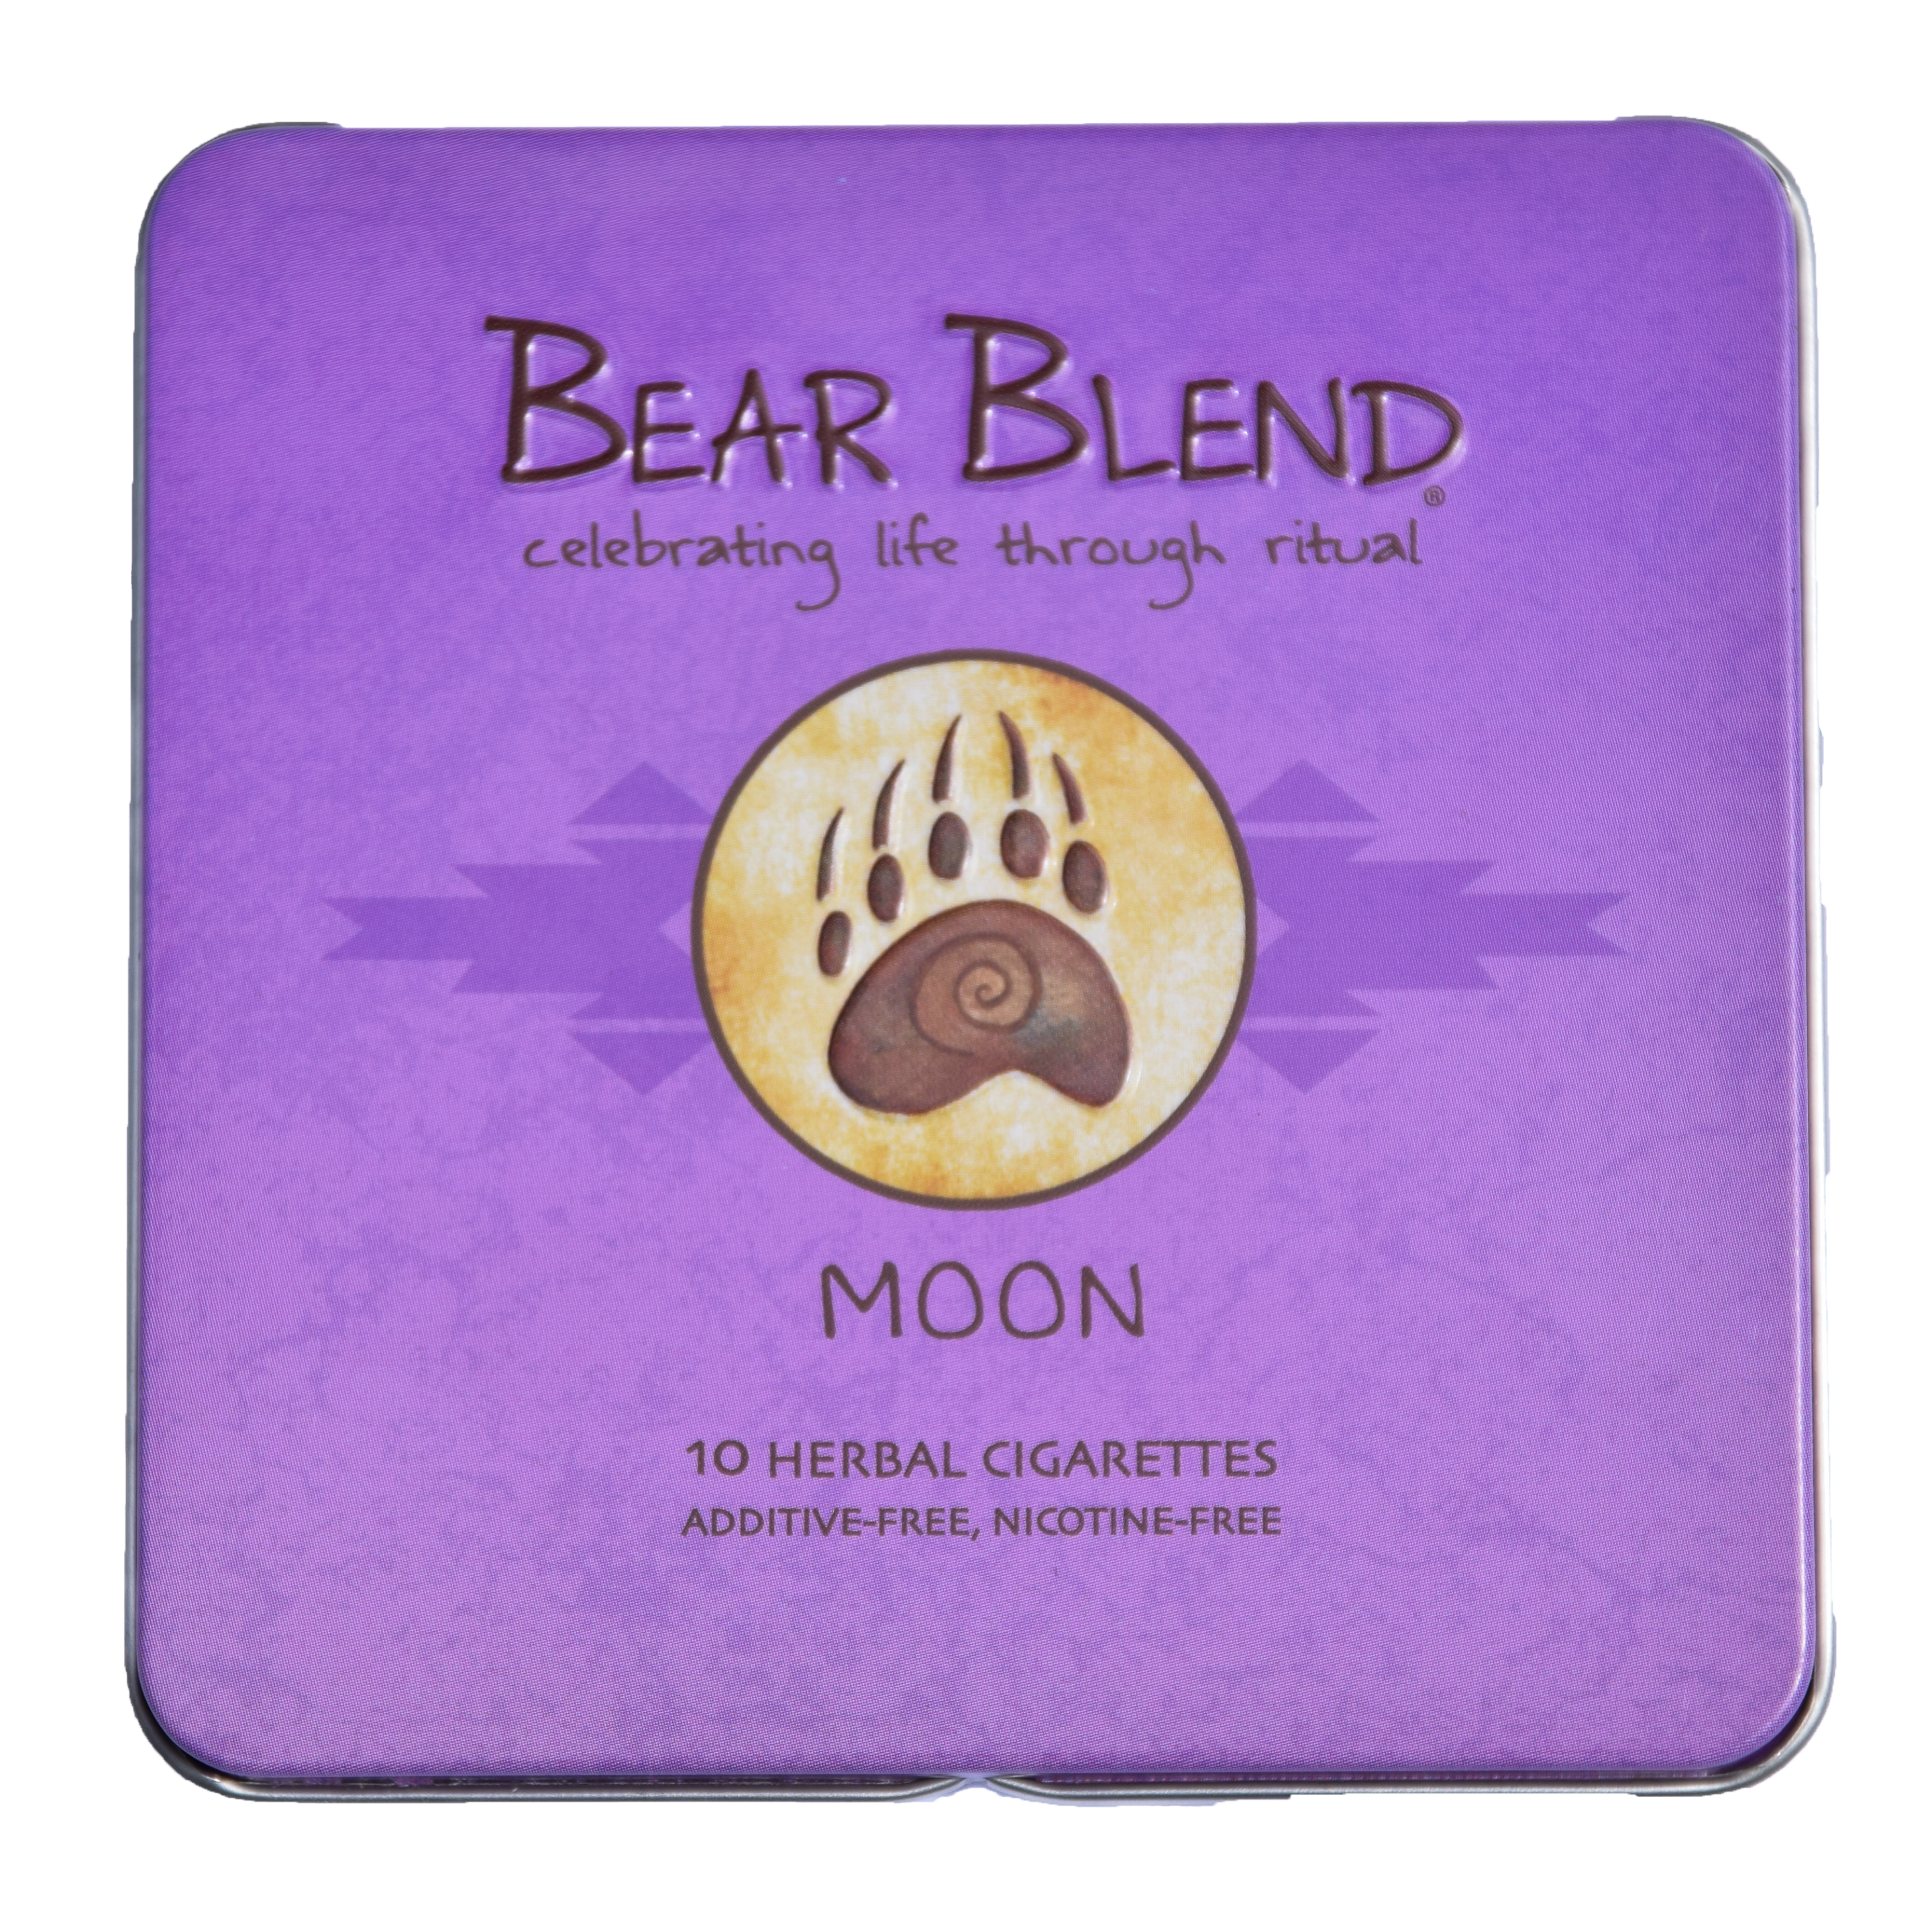 HERBALICIOUS — All 11 Smokable Herbs - Bear Blend